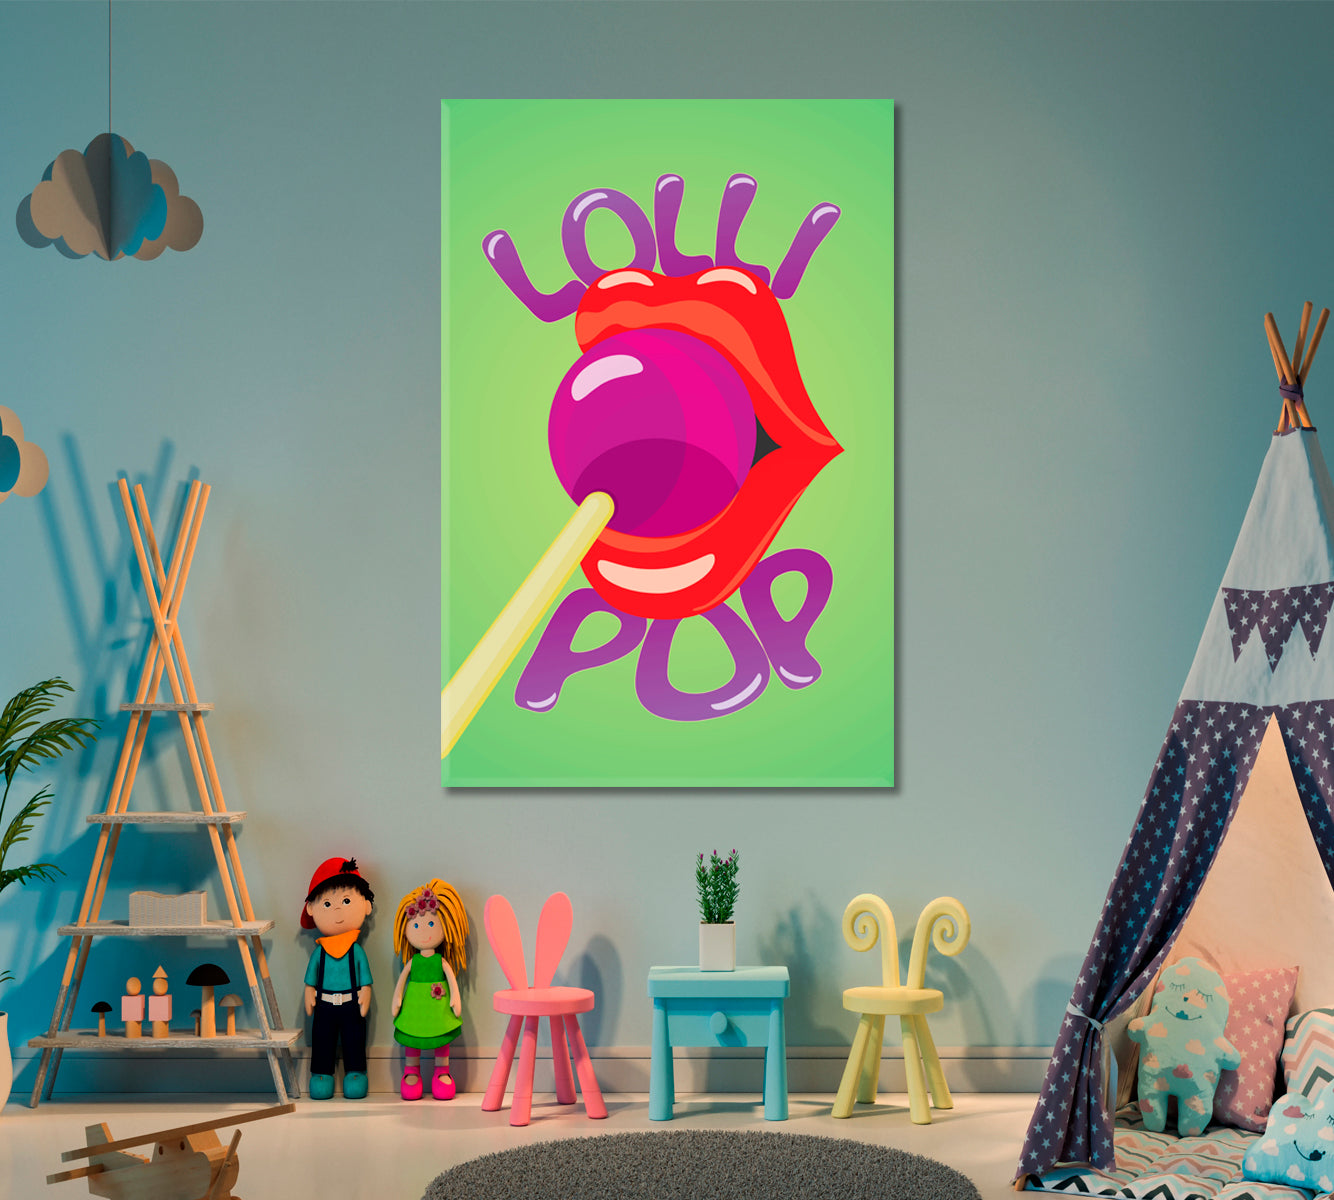 POP ART Lips & Lollipop Light Green Purple Red Colorful Poster Pop Art Canvas Print Artesty   